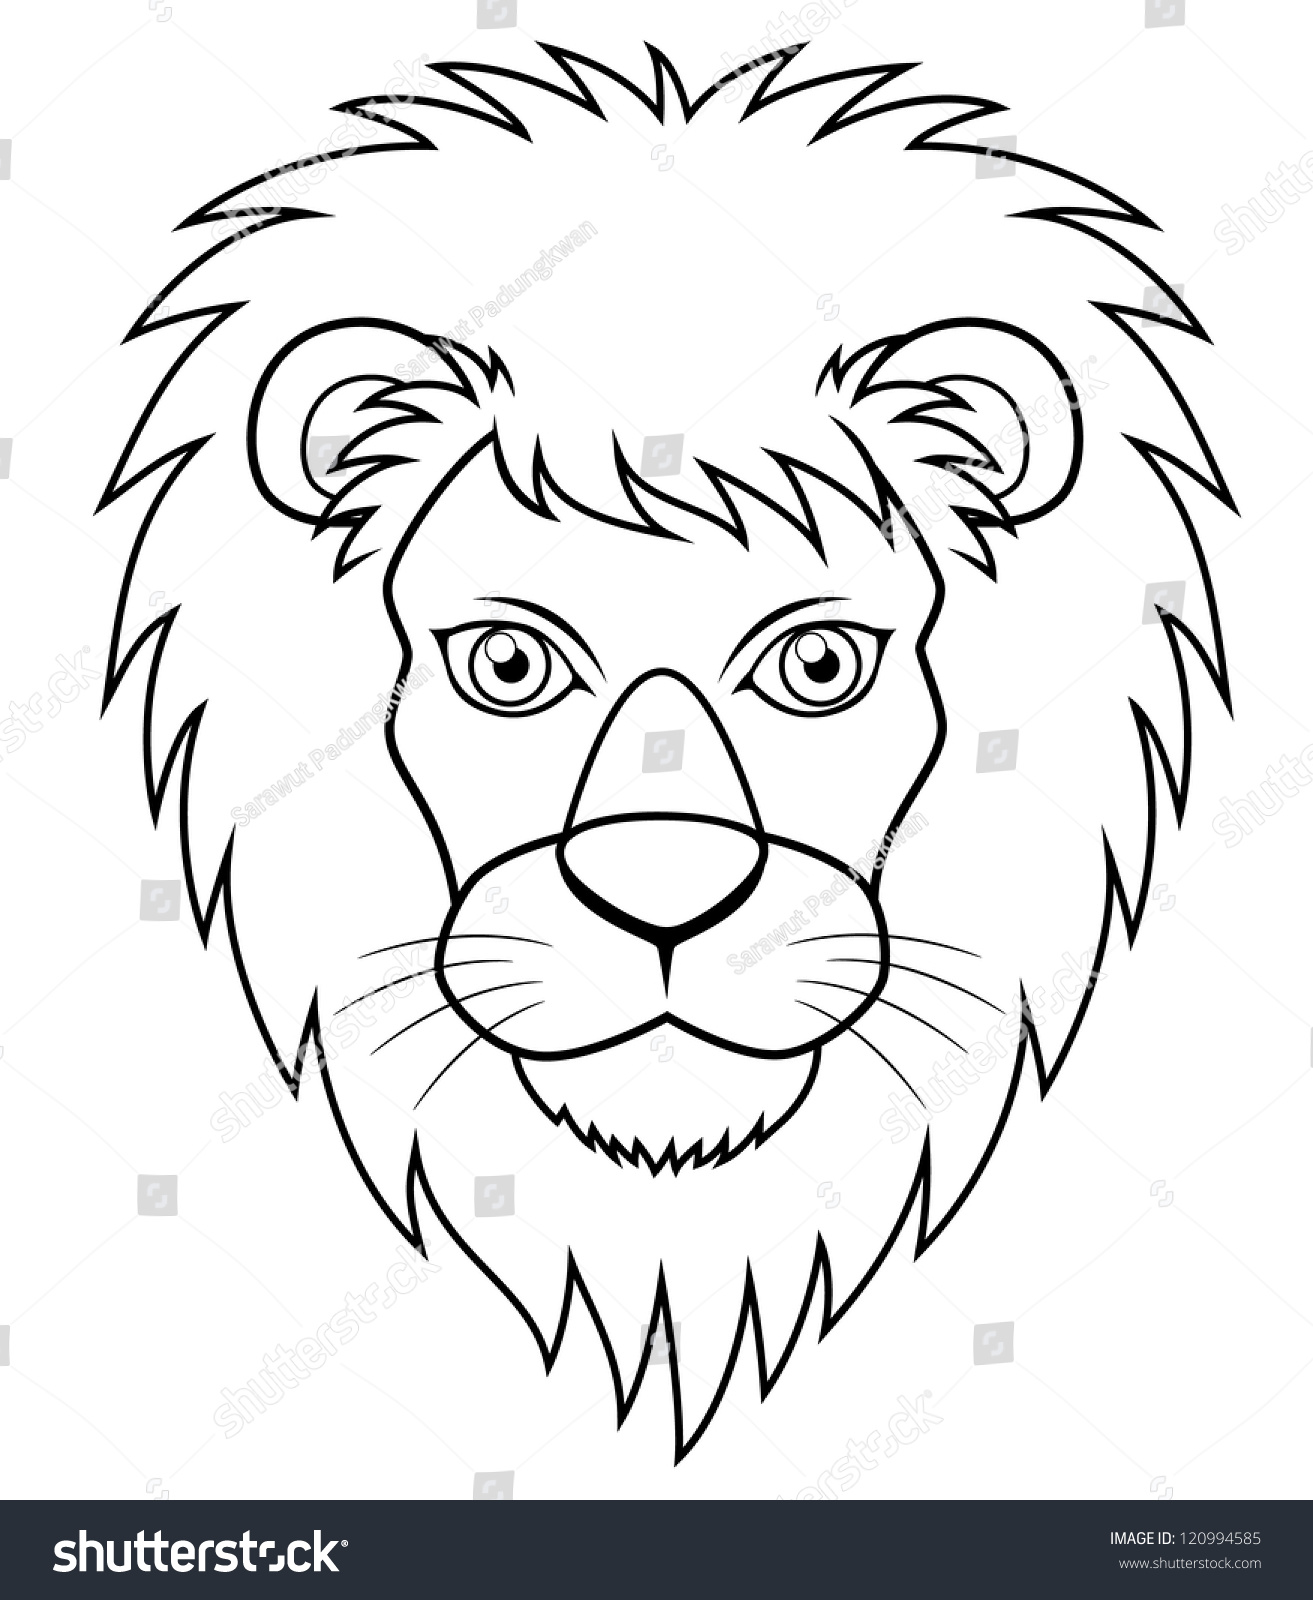 Illustration Of Lion Face Outline 120994585 : Shutterstock